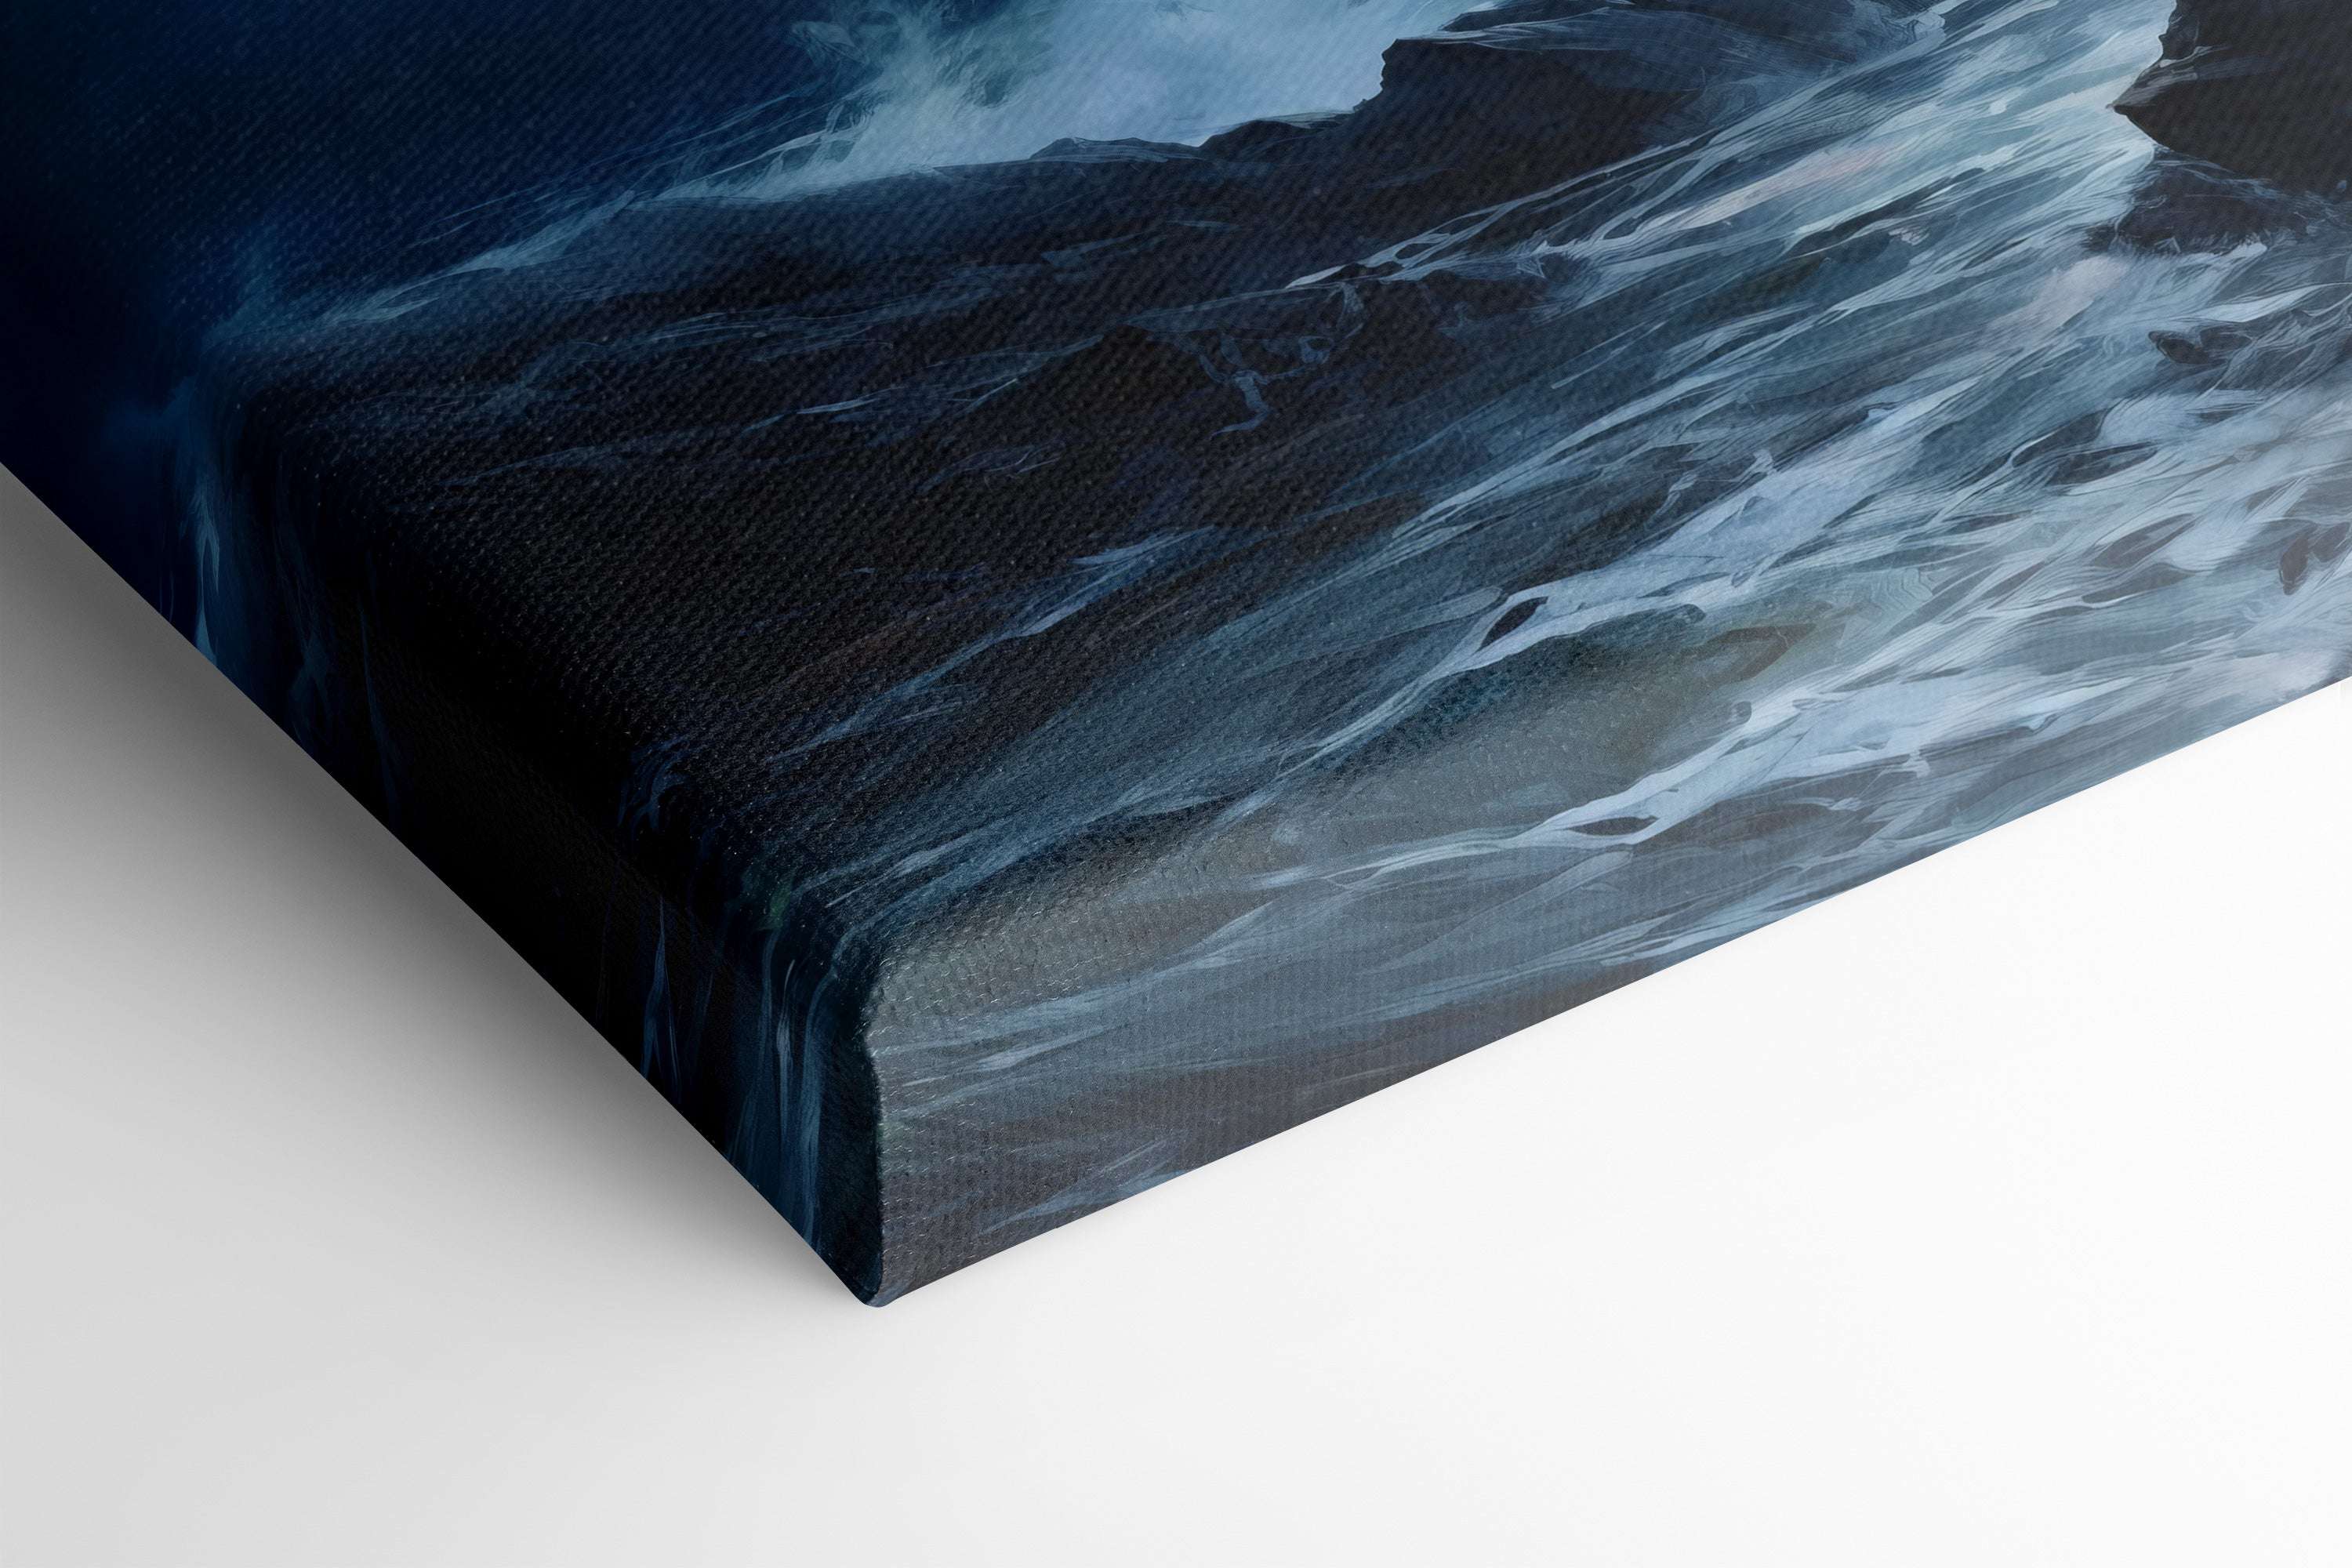 Blue Sea Waves Striking the Coast - Canvas Print - Artoholica Ready to Hang Canvas Print